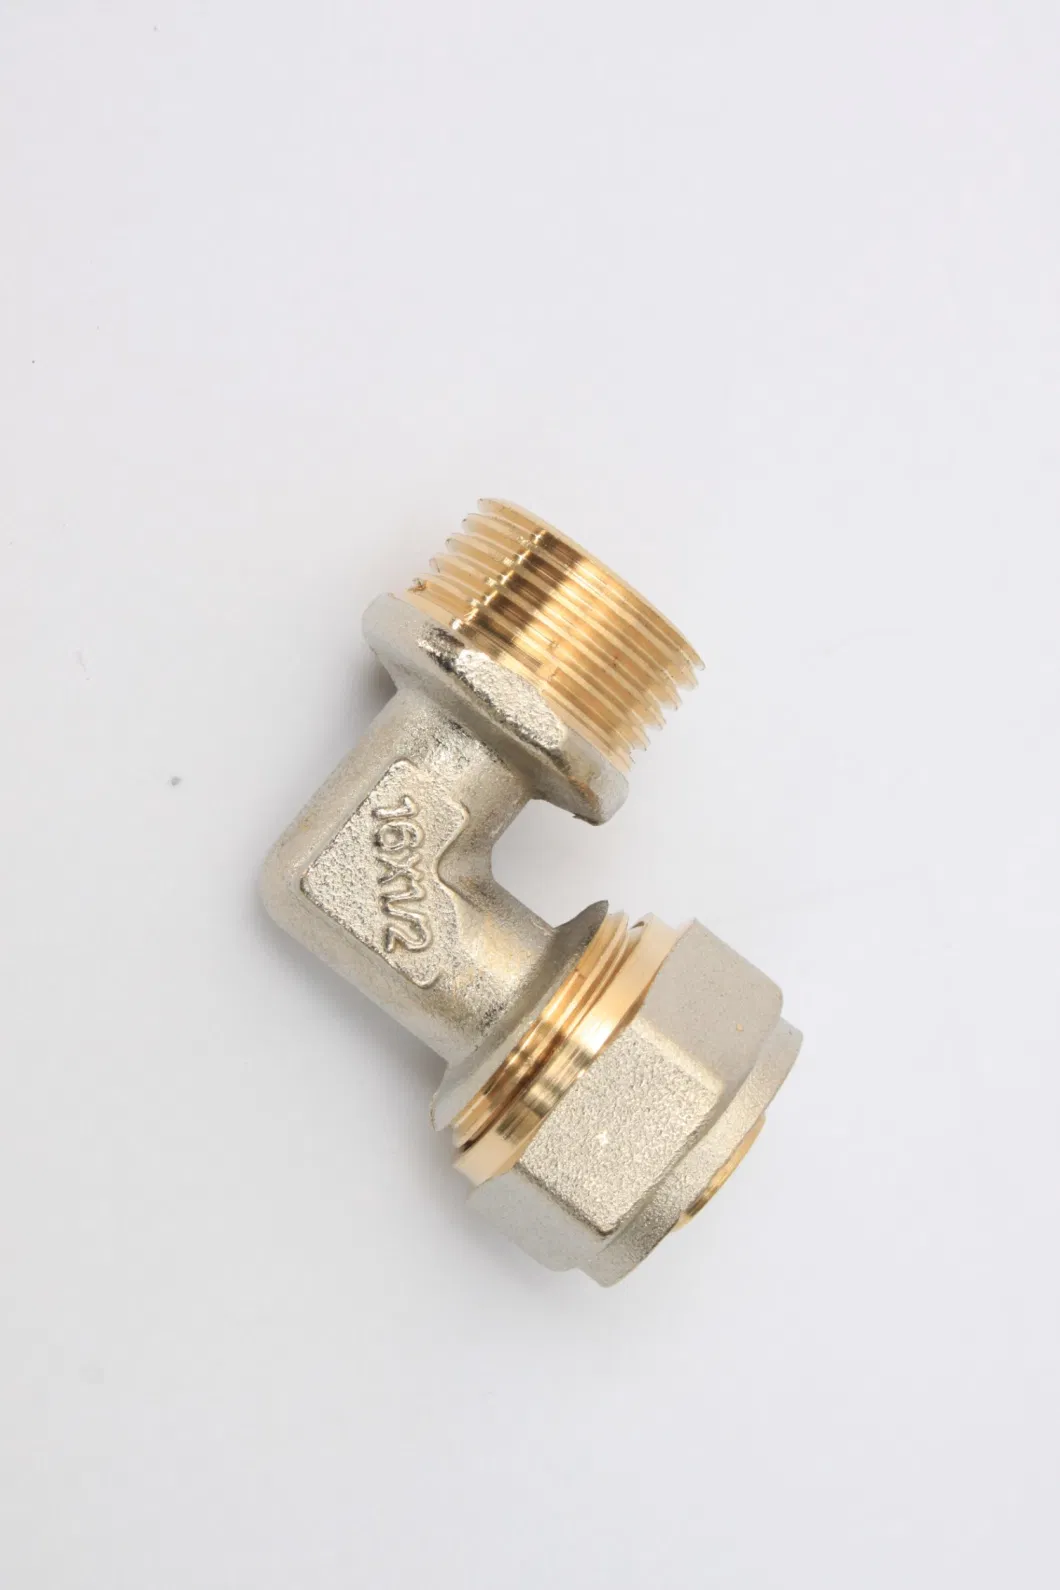 Bass Female Male Thread Copper Plumbing System Pex-Al-Pex Pipe Sanitary Elbow Pipe Cross Tee Fittings